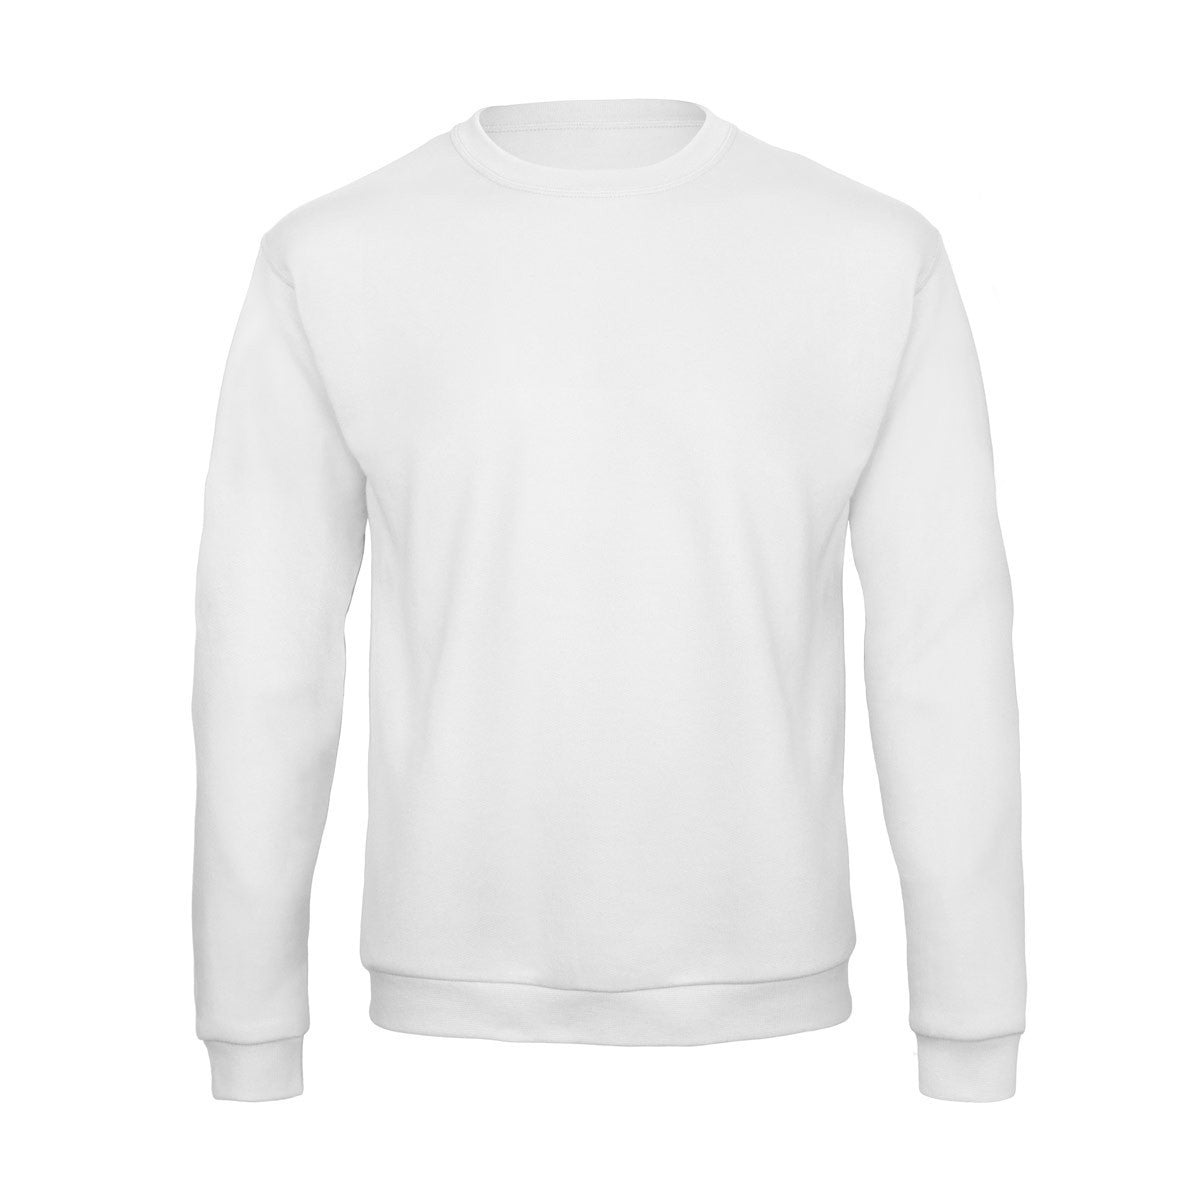 Budget Sweater (Men/ Unisex) (Muster)